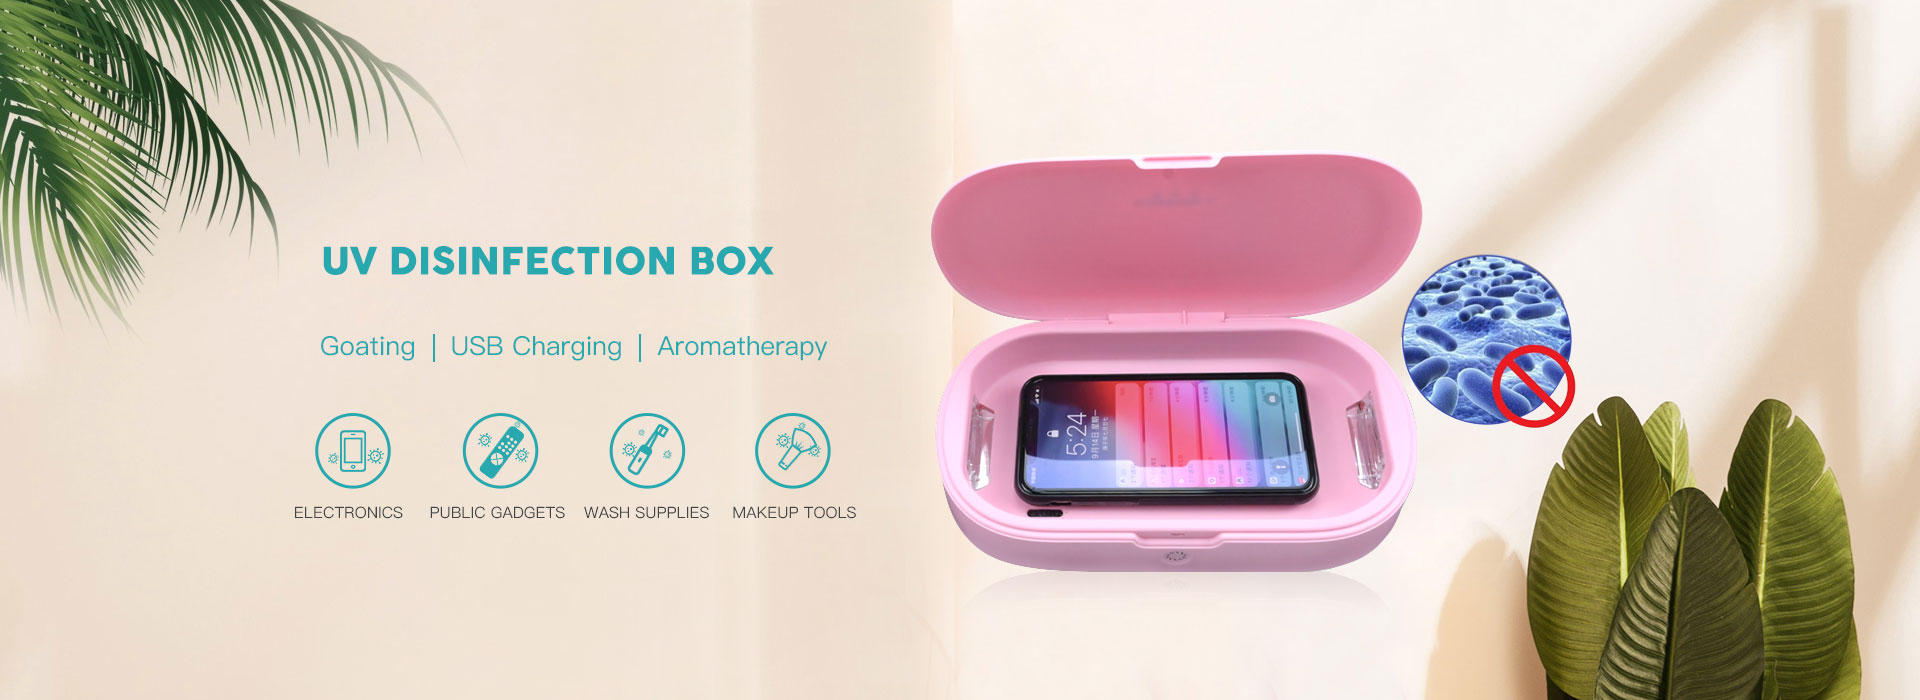 Disinfection UV Box